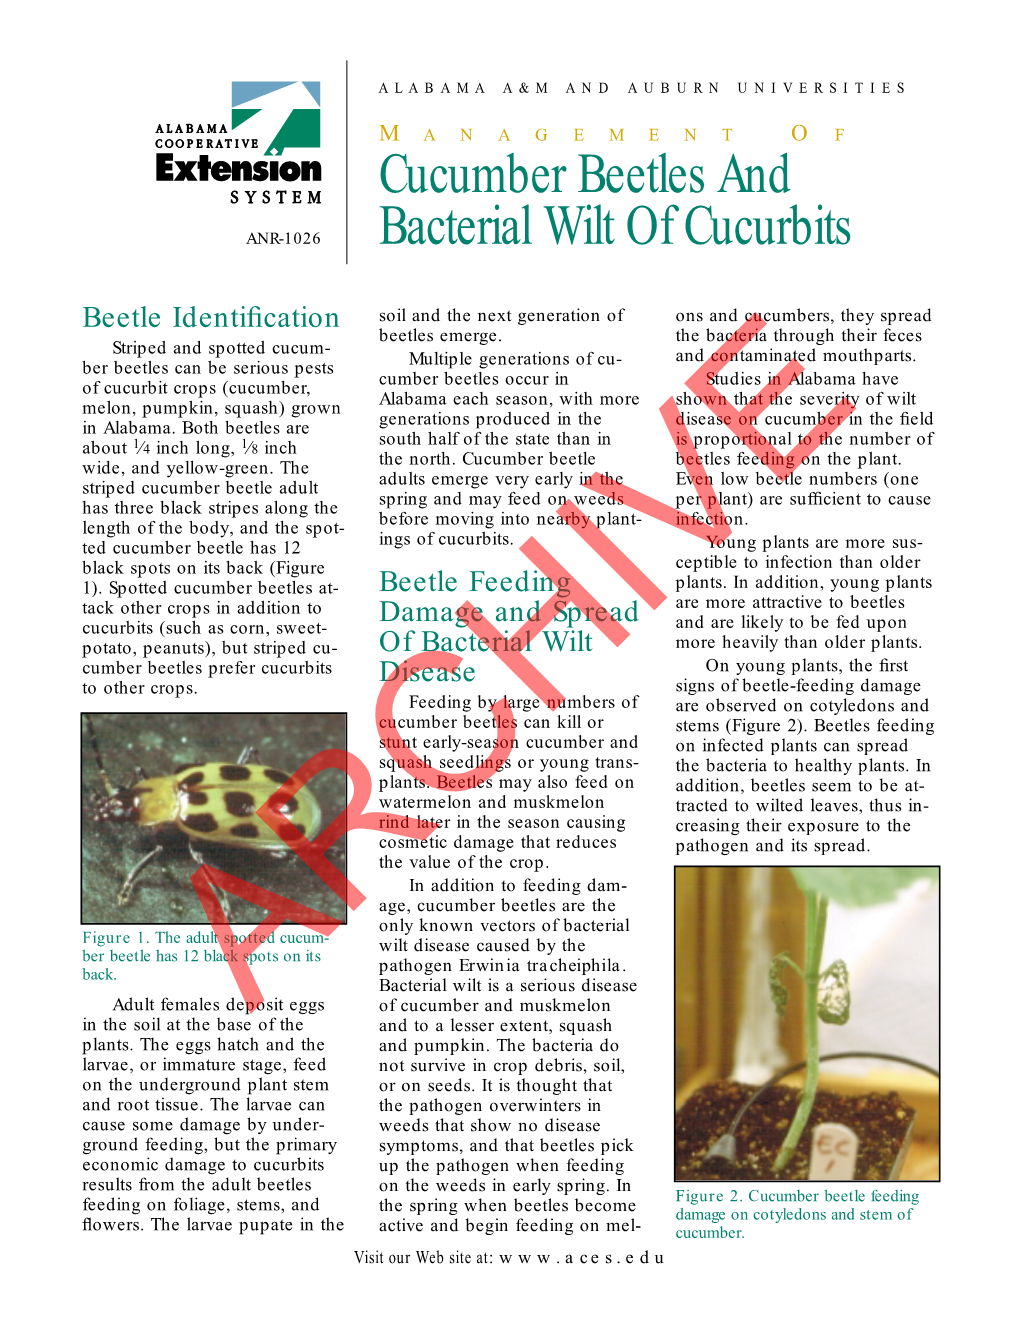 Cucumber Beetles and Bacterial Wilt of Cucurbits